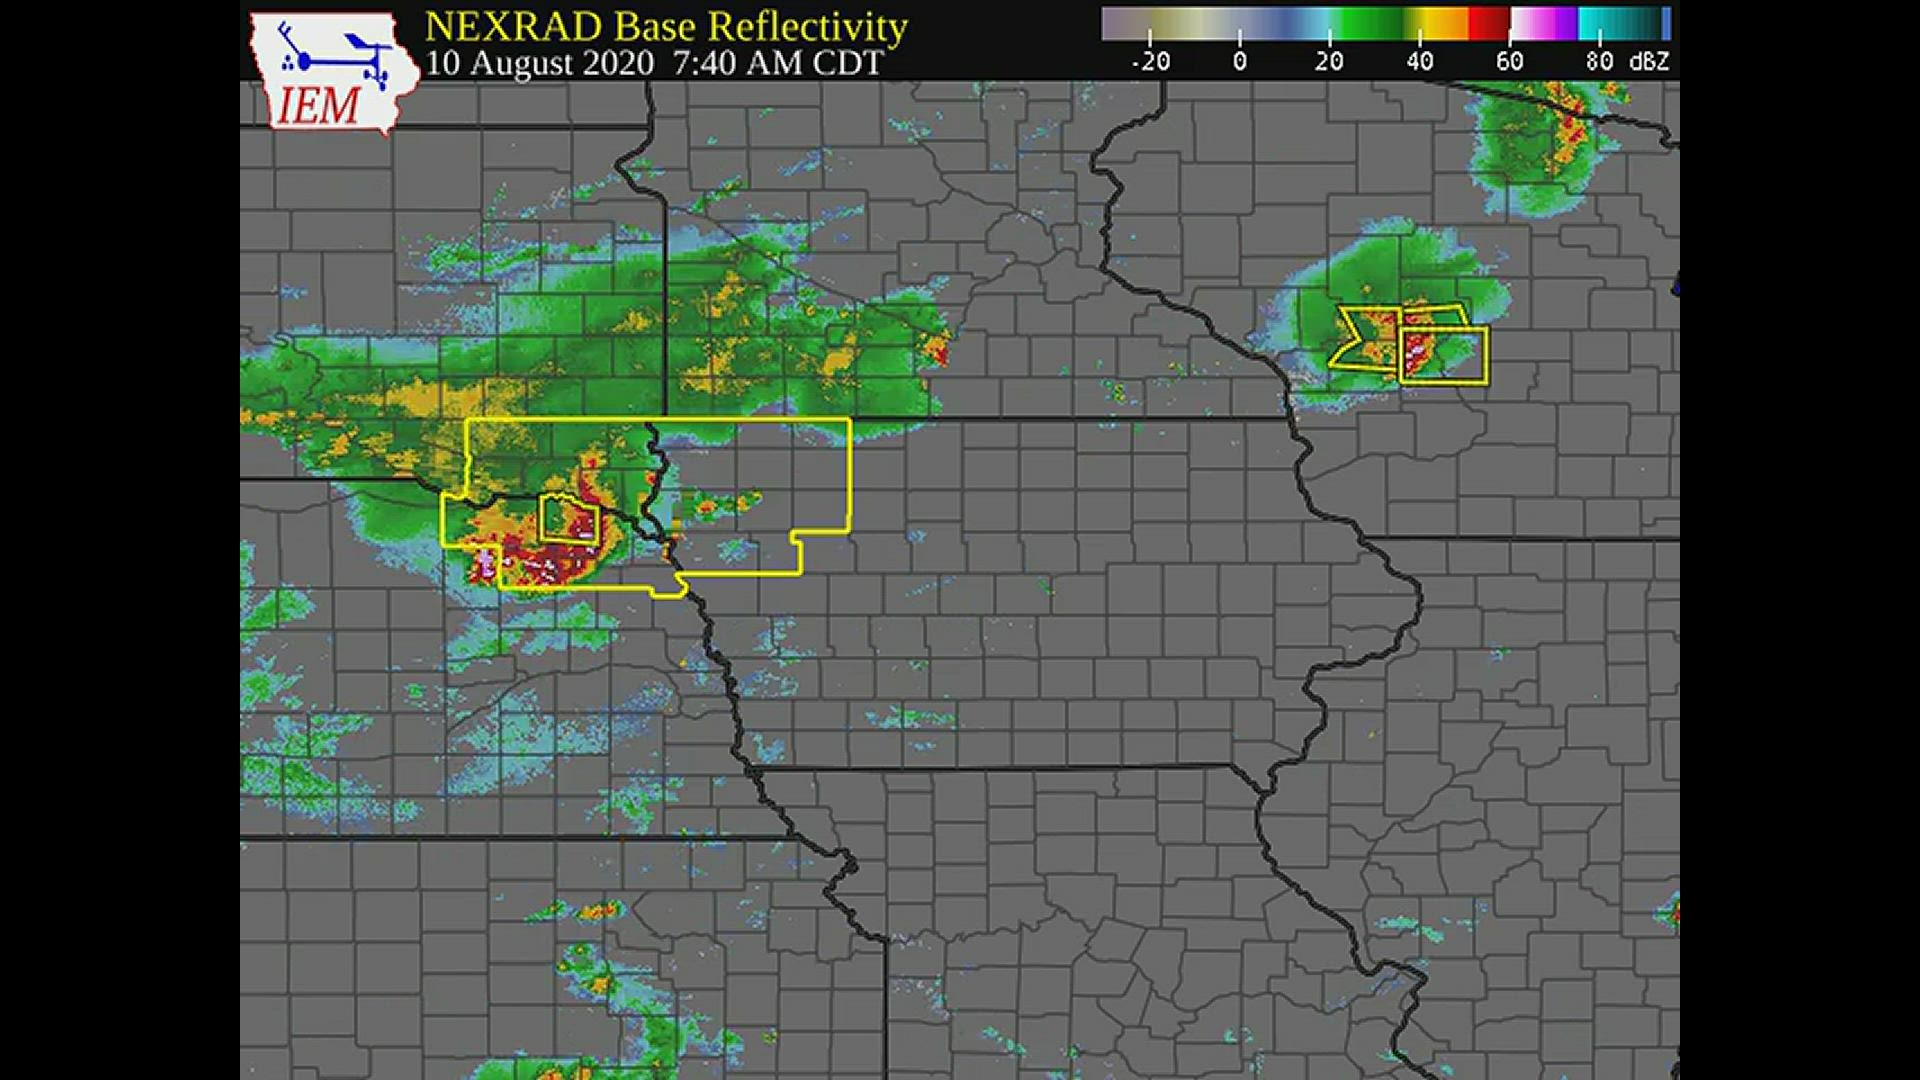 Radar loop from August 10, 2020 courtesy of Iowa Environmental Mesonet